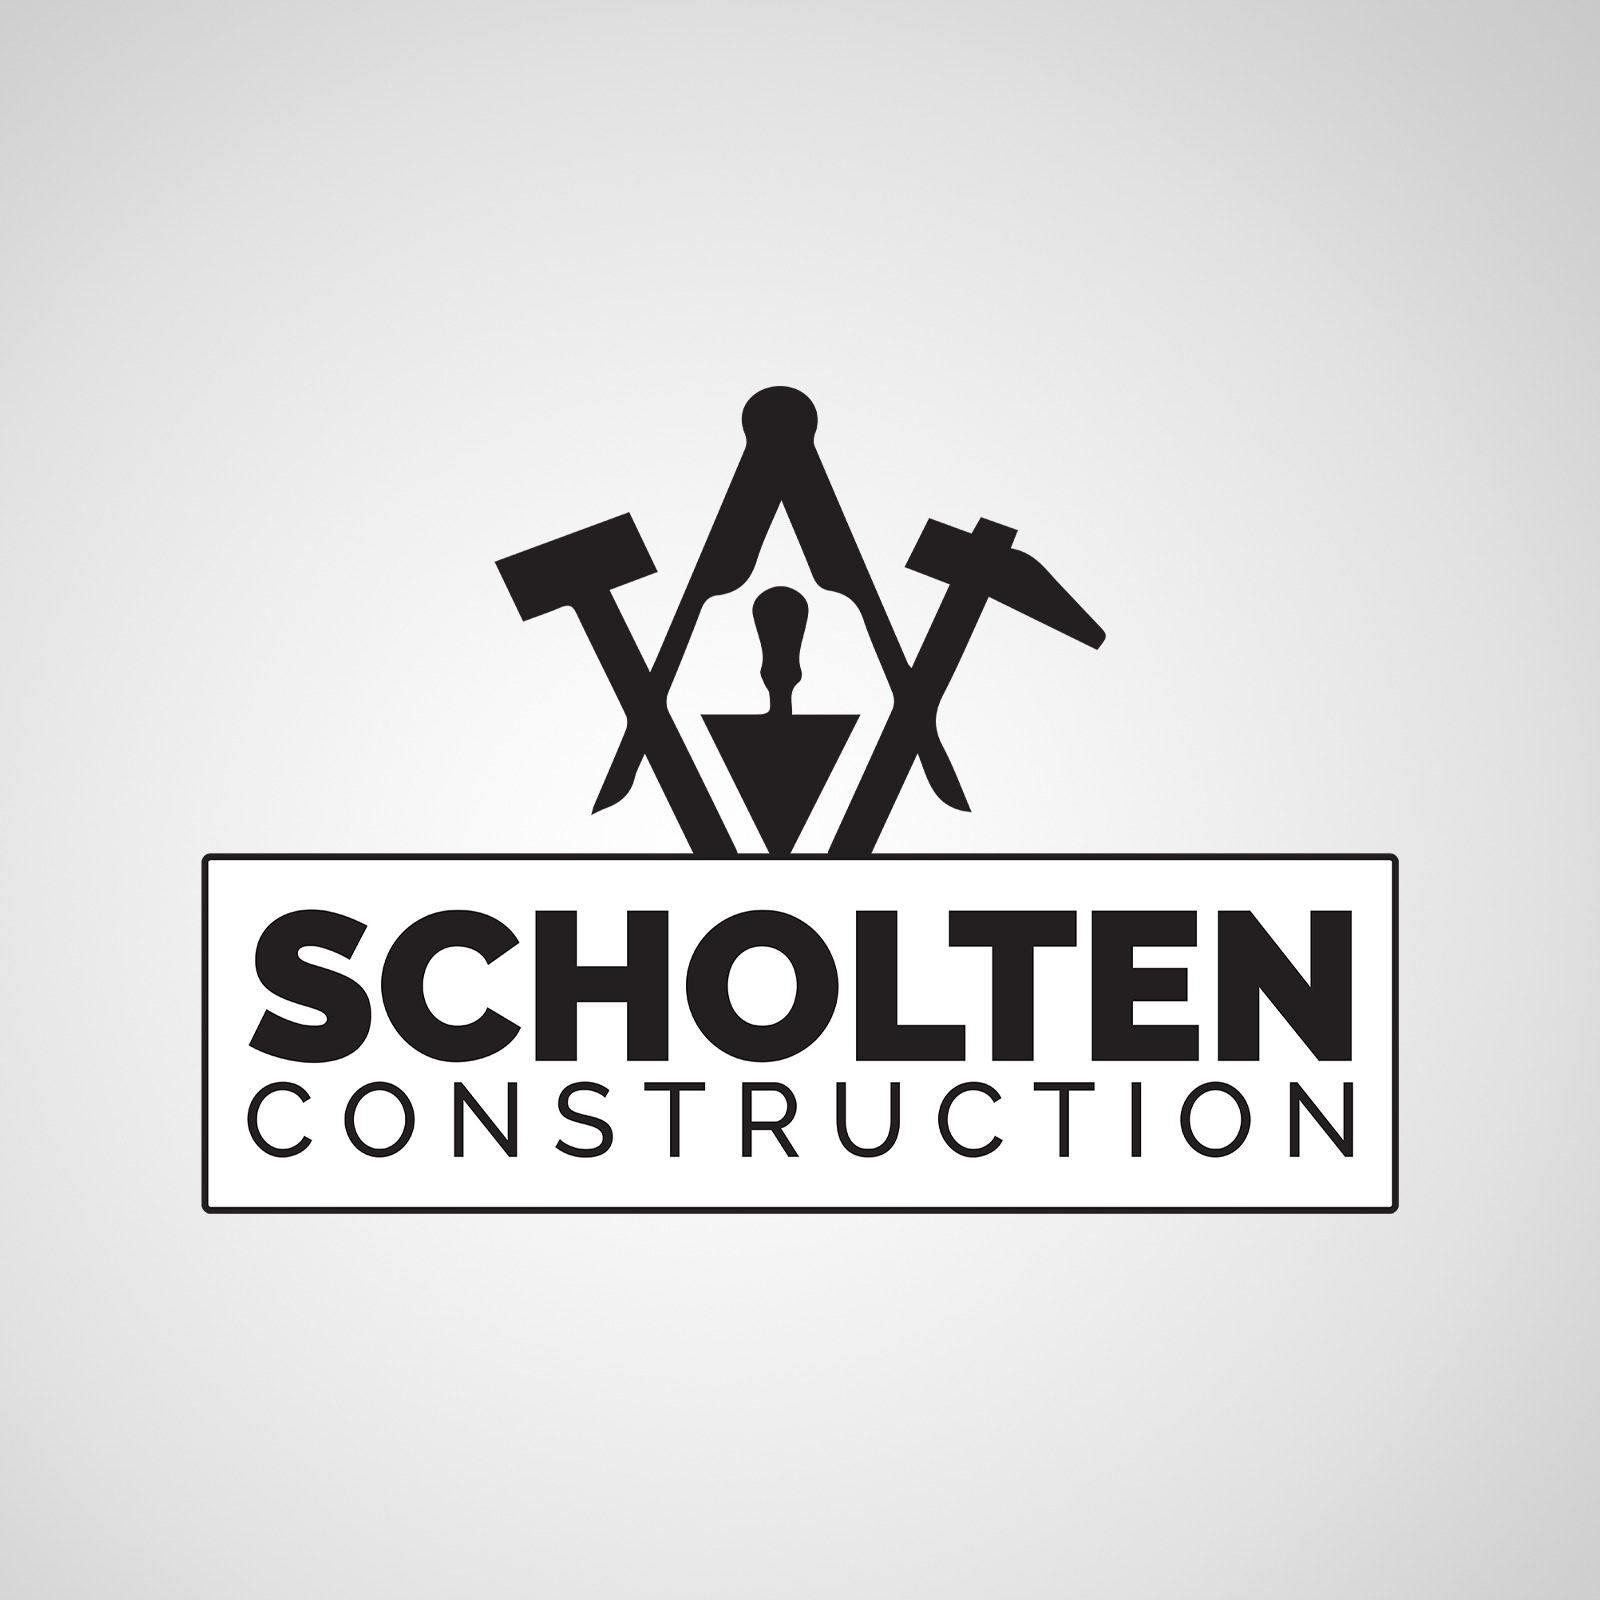 Scholten Construction - Sioux Falls, SD 57106 - (605)351-0861 | ShowMeLocal.com